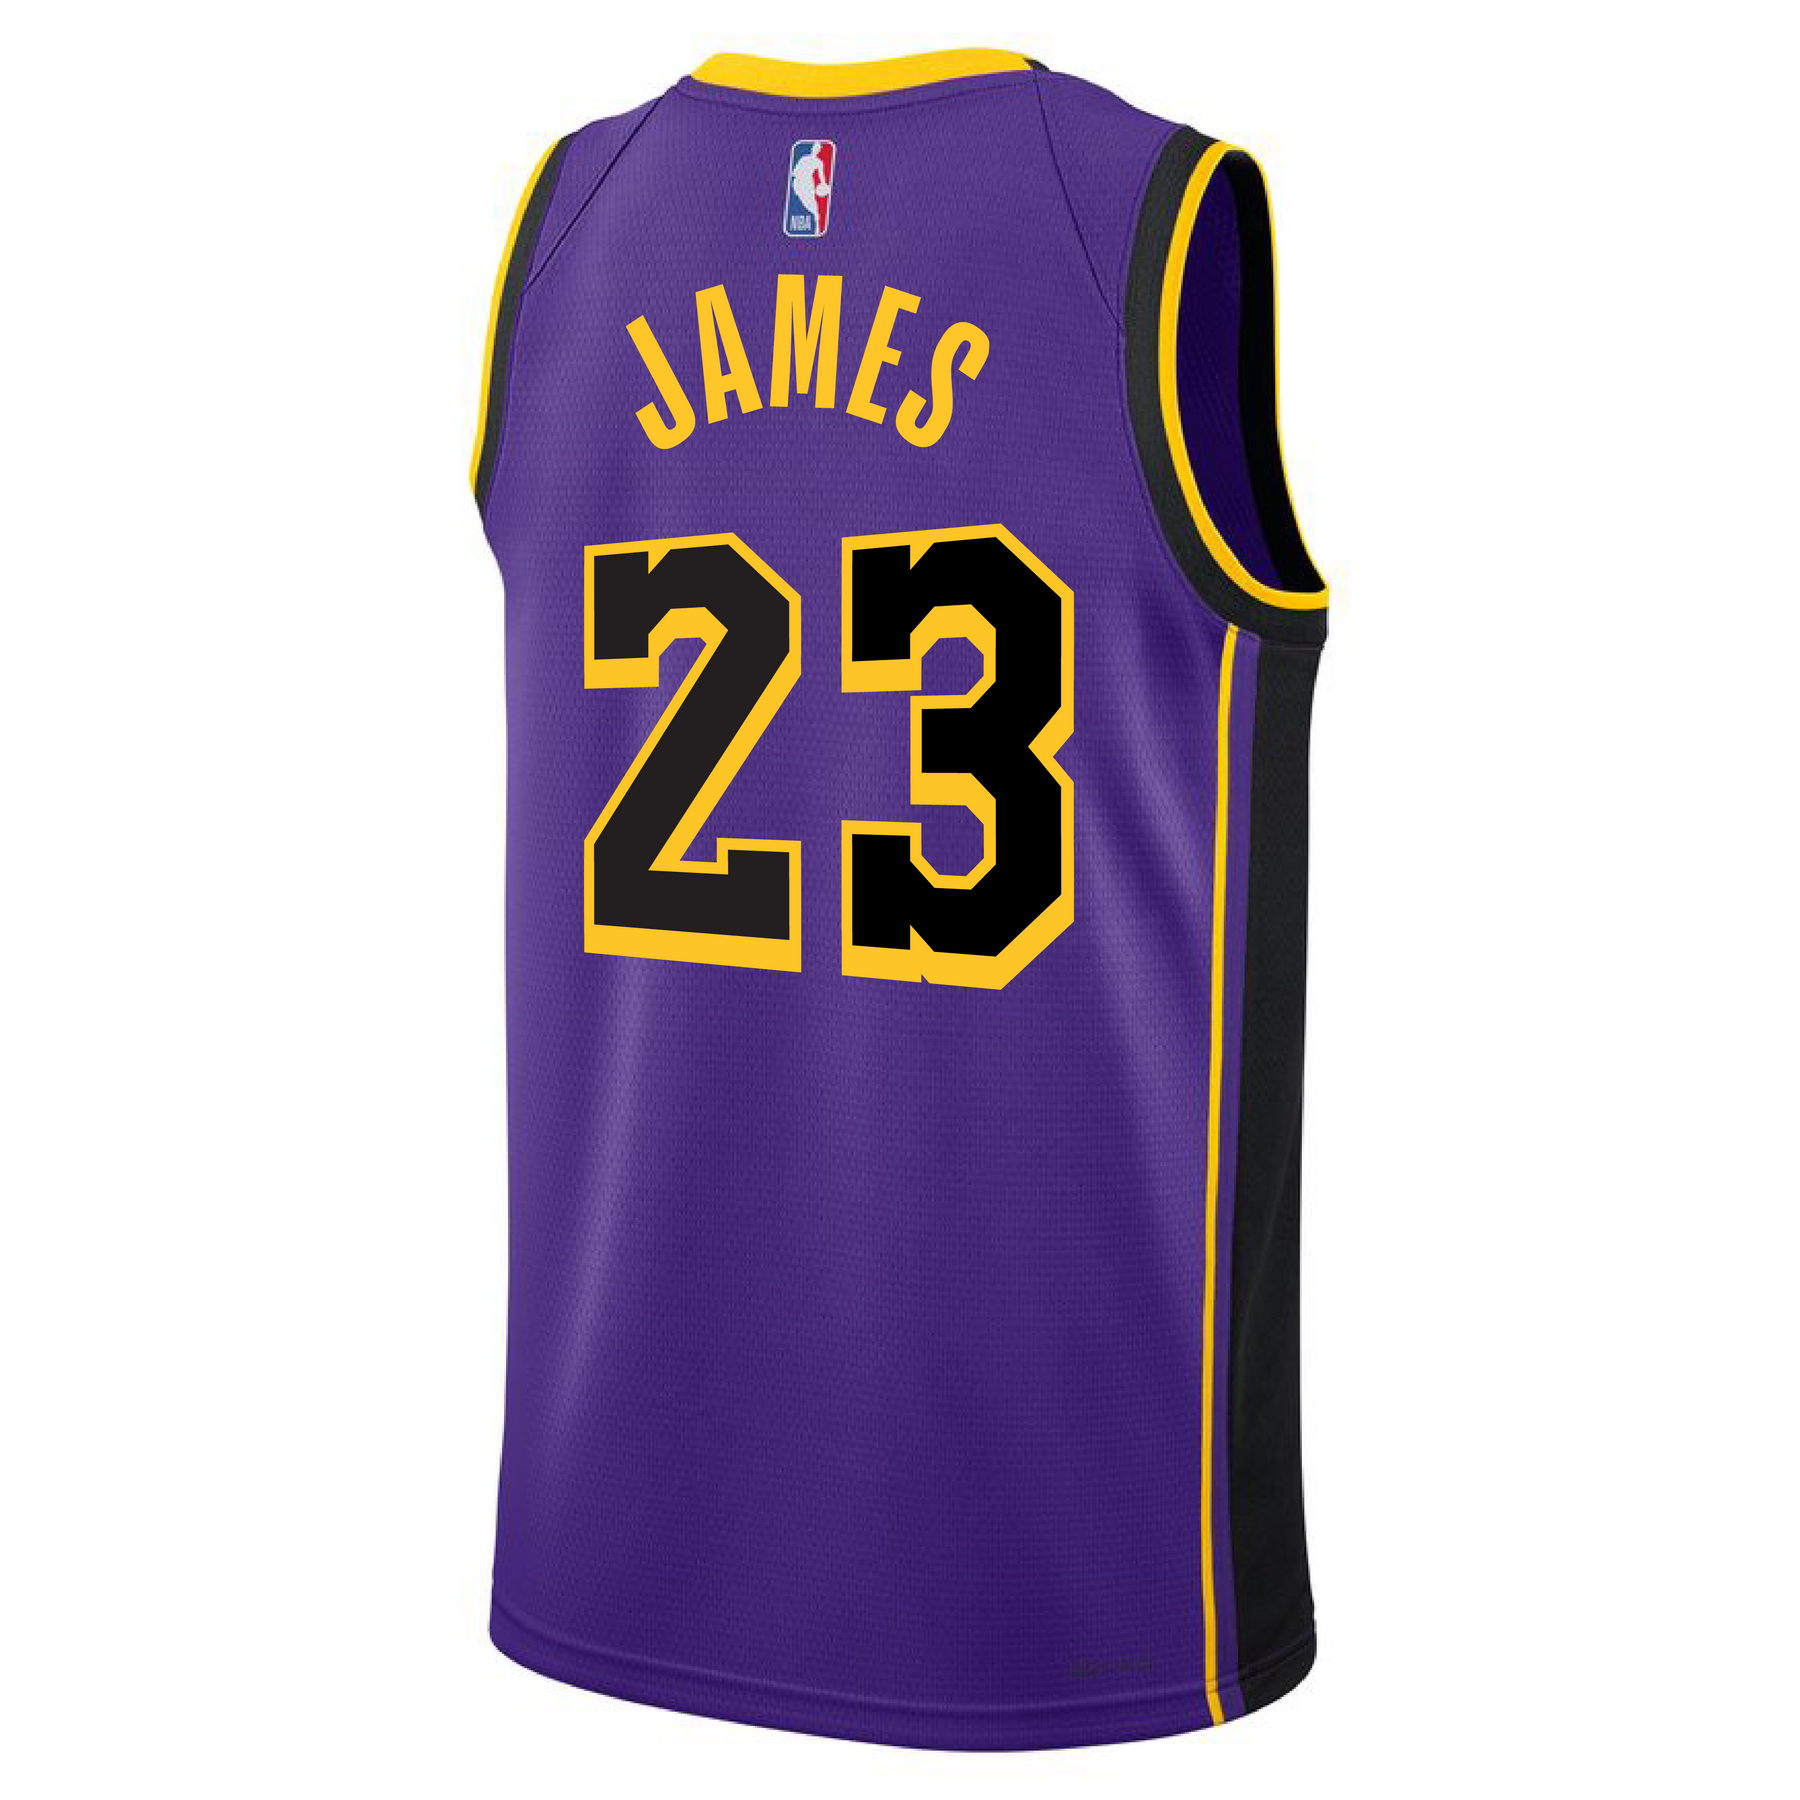 Lakers Authentic Jersey - LeBron James- NBA - 23, Men's Fashion